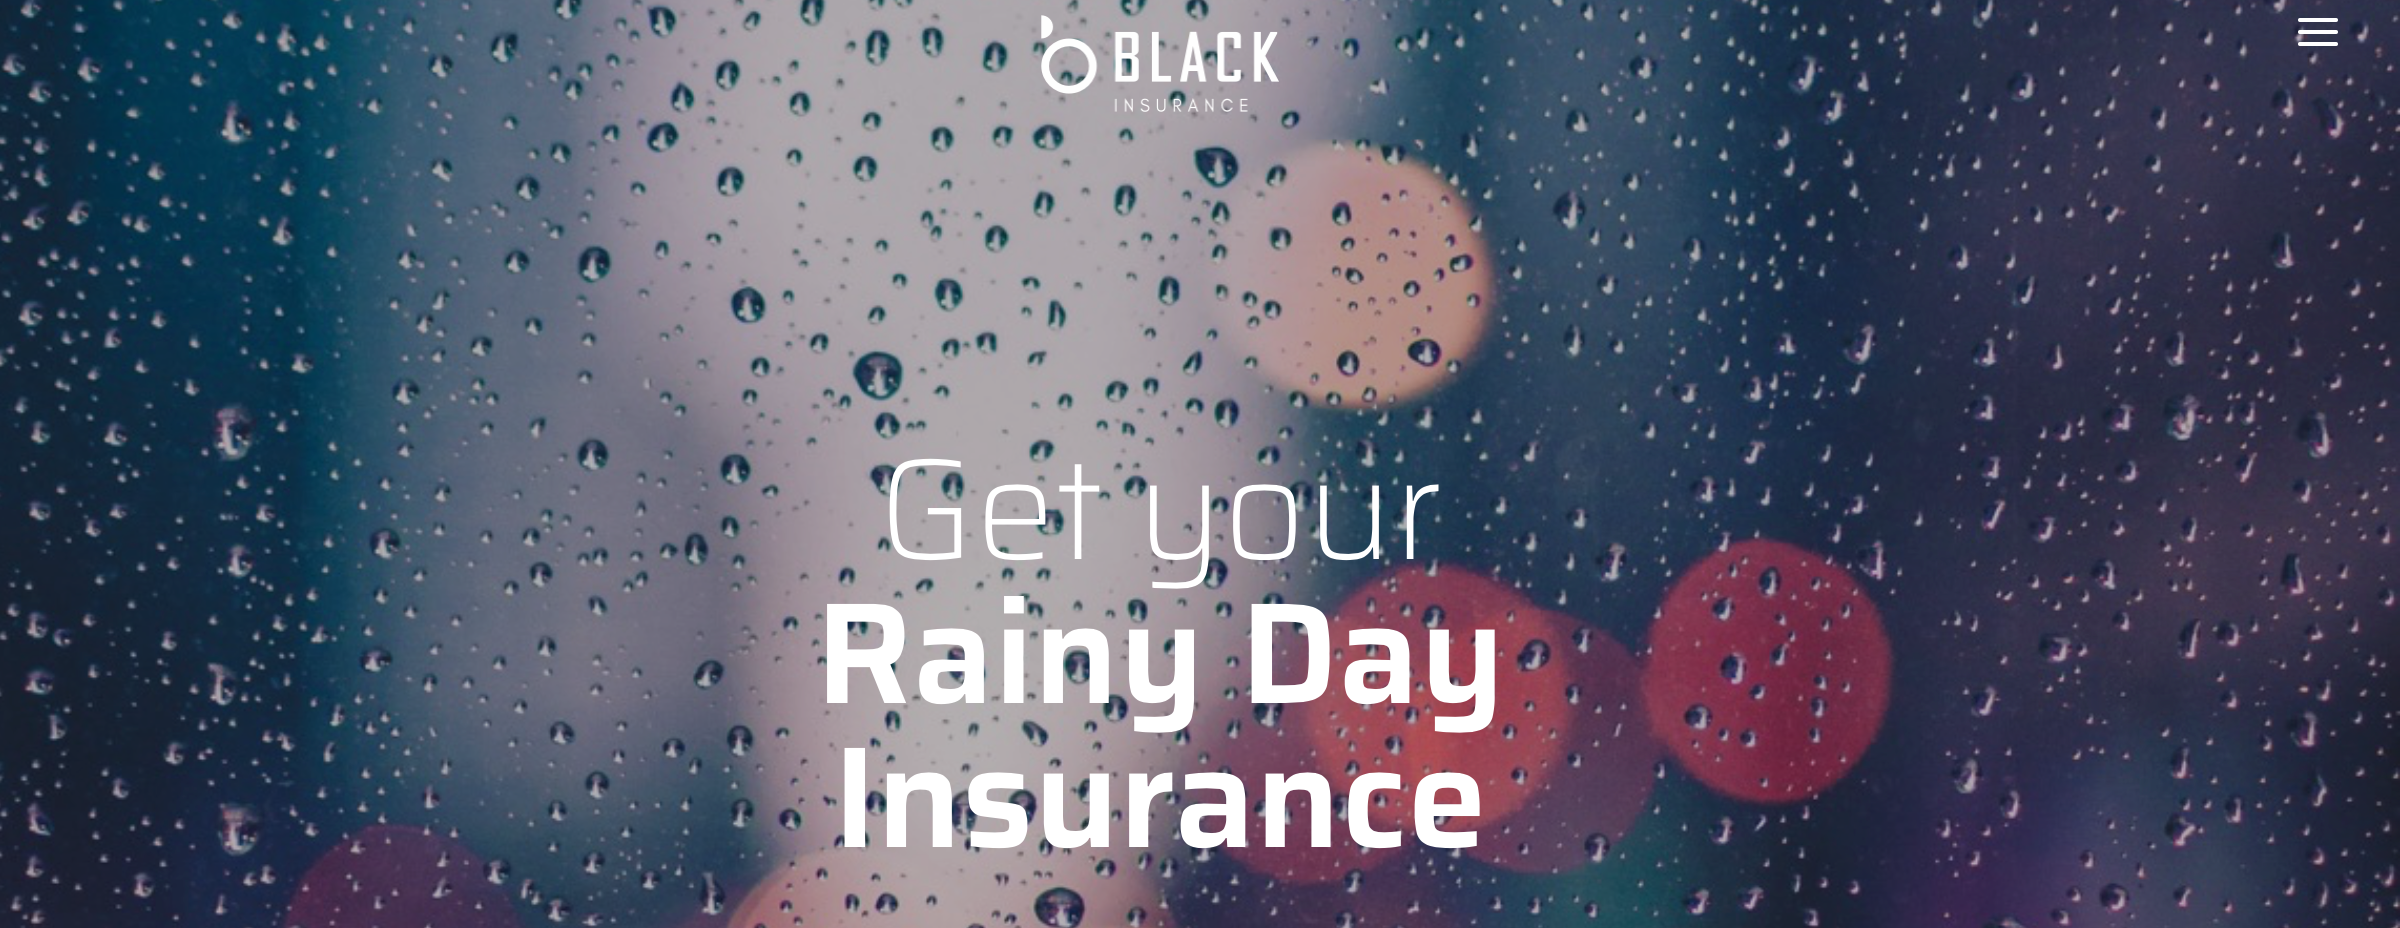 Introducing Rainy Day A Blockchain Based Insurance Game By Stefan Beyer Blackinsurance Medium